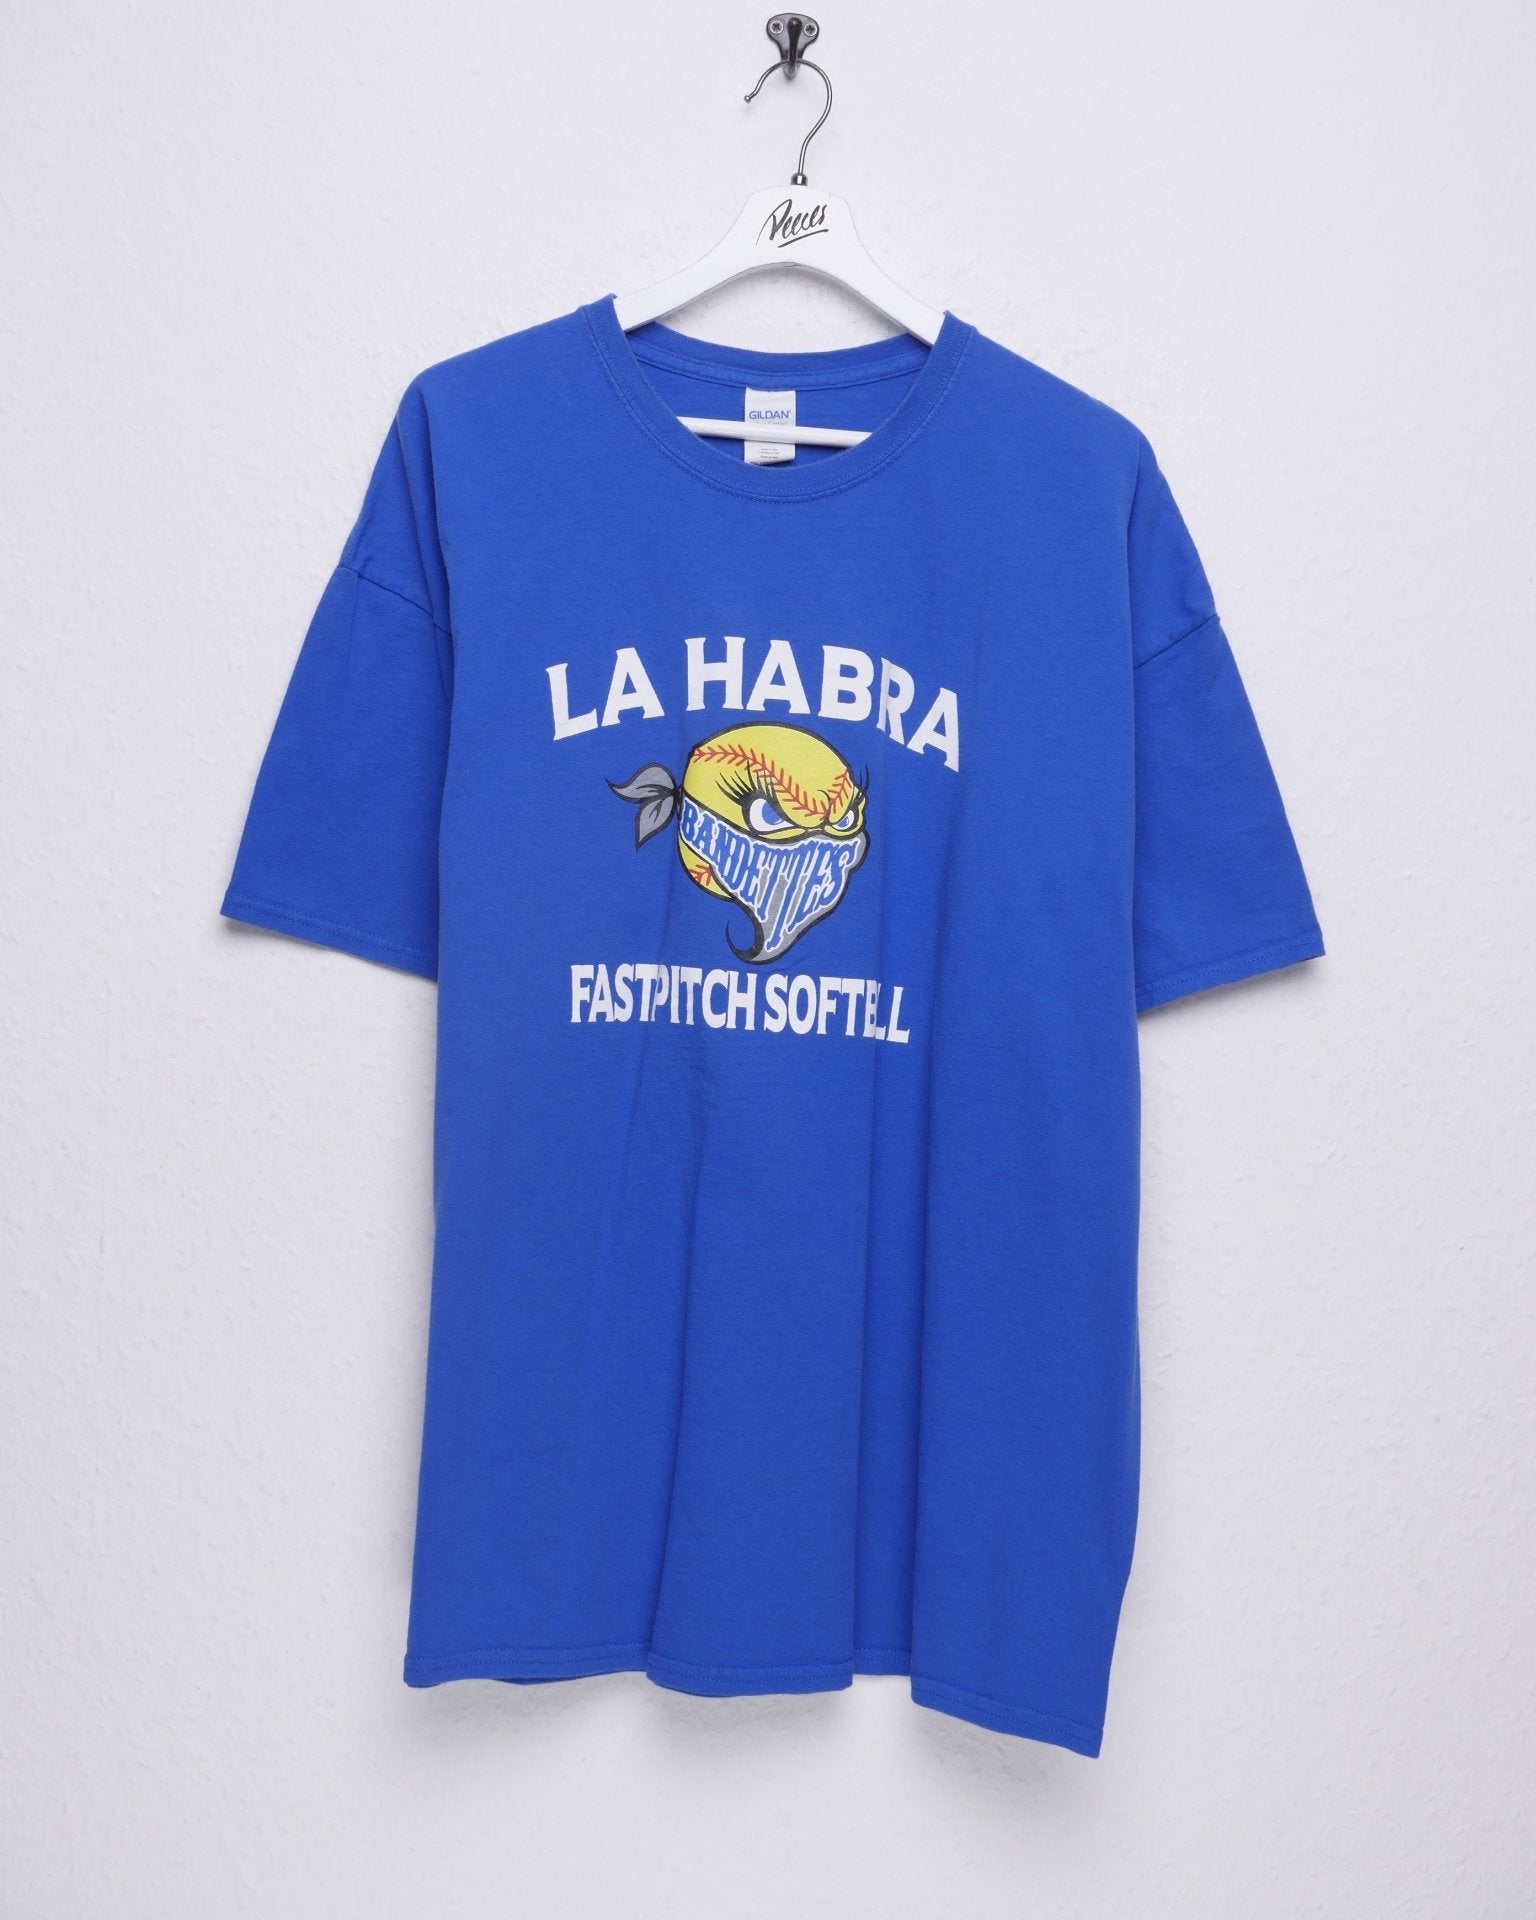 La Habra Fast pitch Softball printed Graphic Vintage Shirt - Peeces